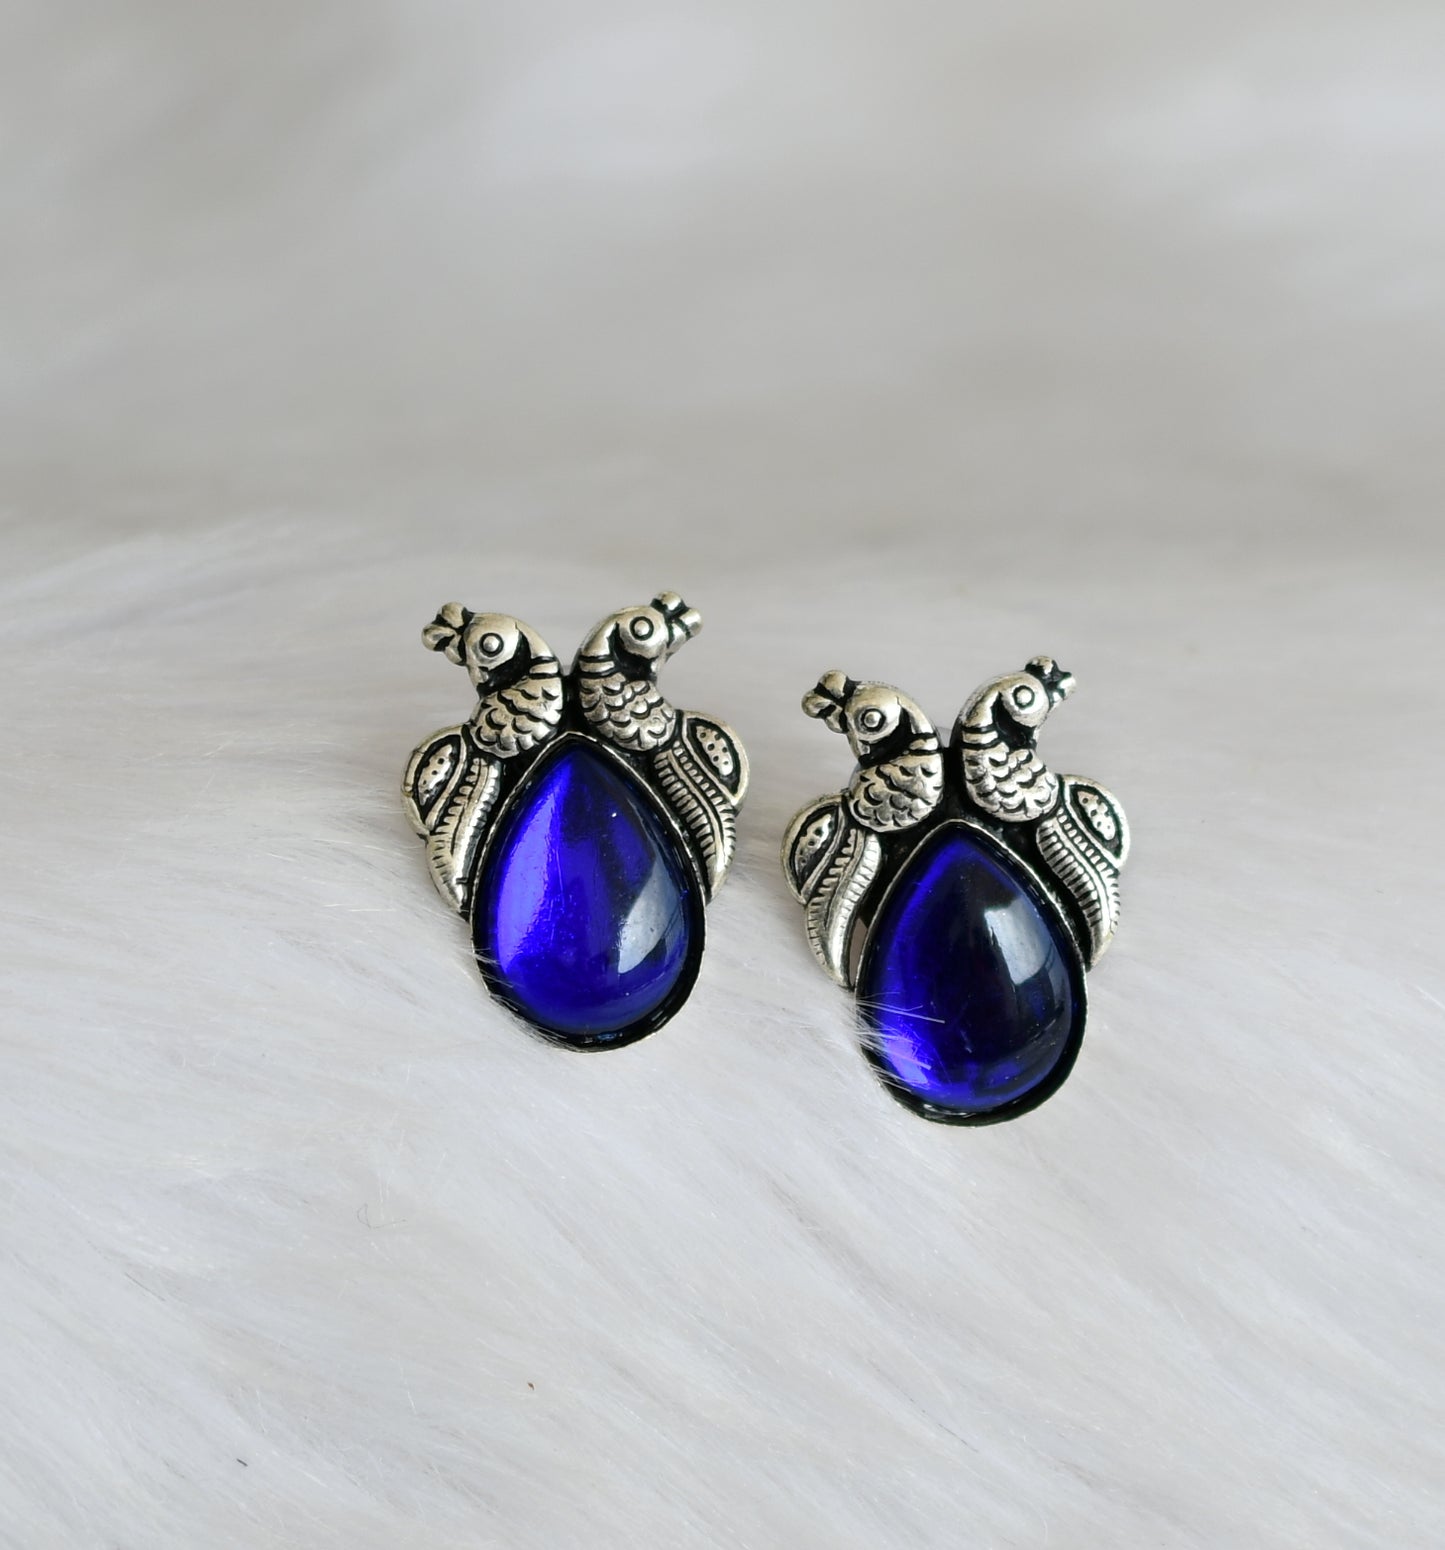 Silver tone blue stone peacock-Greps black thread necklace set dj-40177